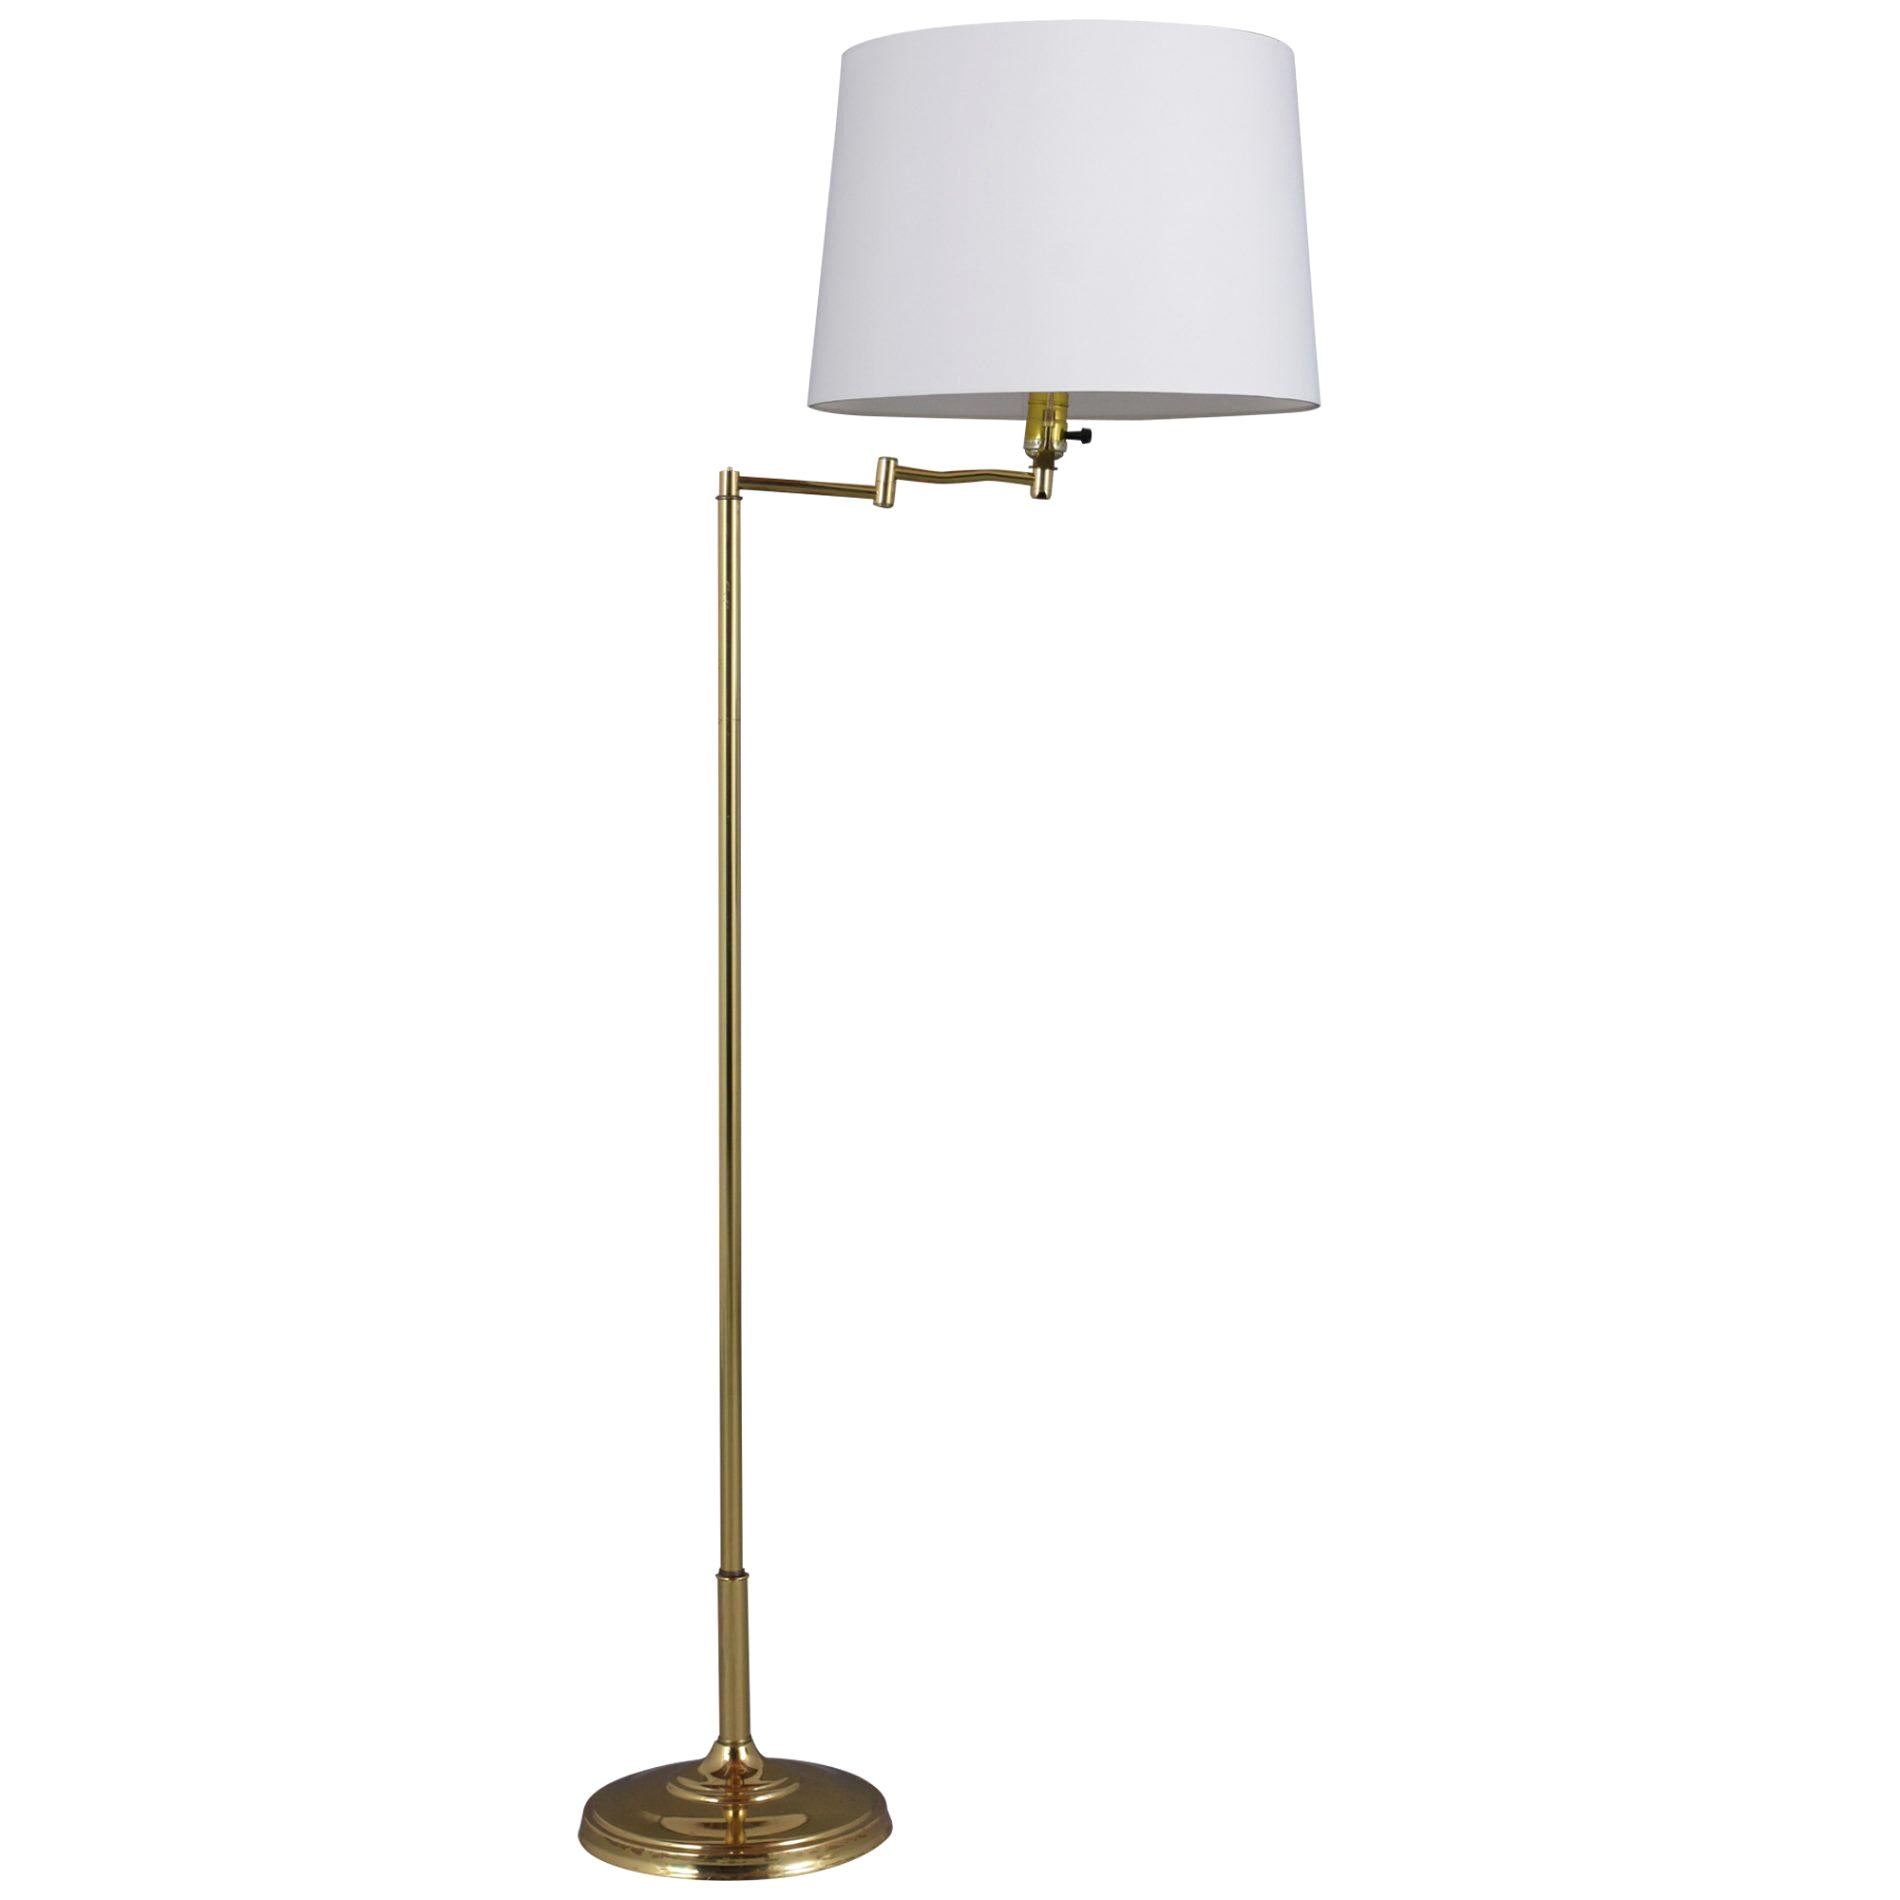 1970s Vintage Mid-Century Modern Adjustable Brass Floor Lamp - Newly Restored